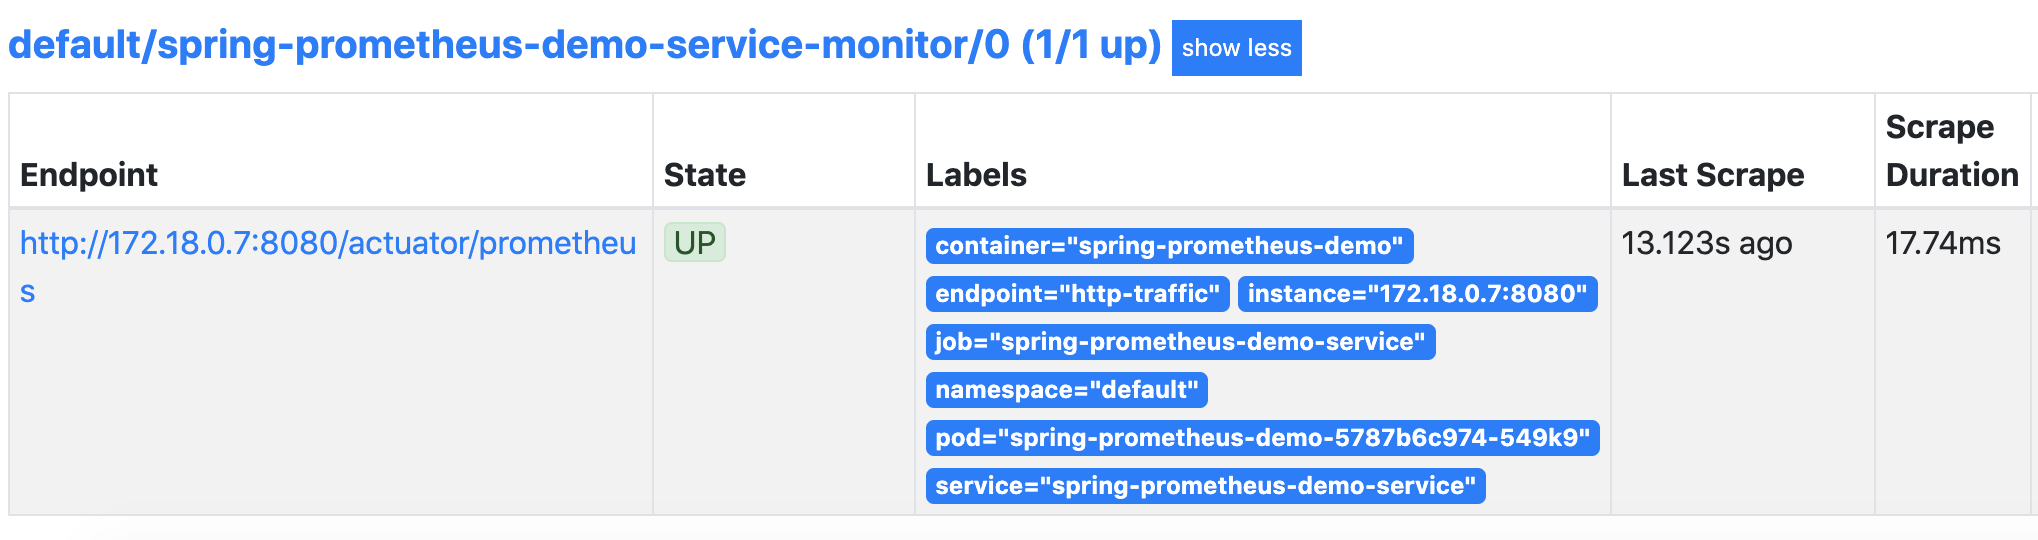 Spring application scrape information in Prometheus